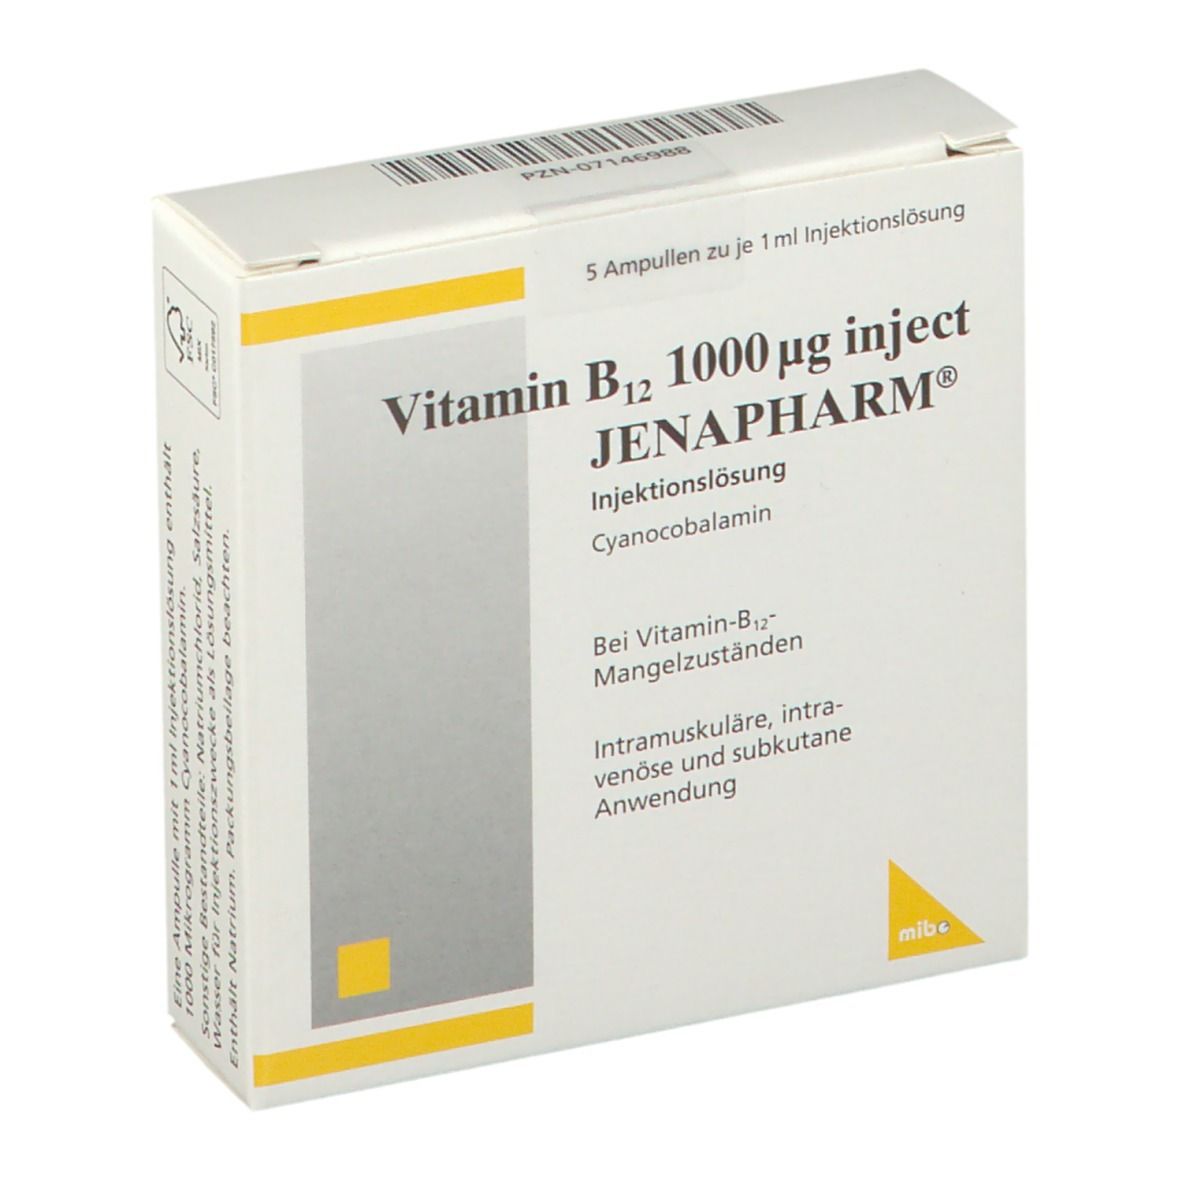 Vitamin B12 1000 µg inject JENAPHARM® 5 St - SHOP APOTHEKE